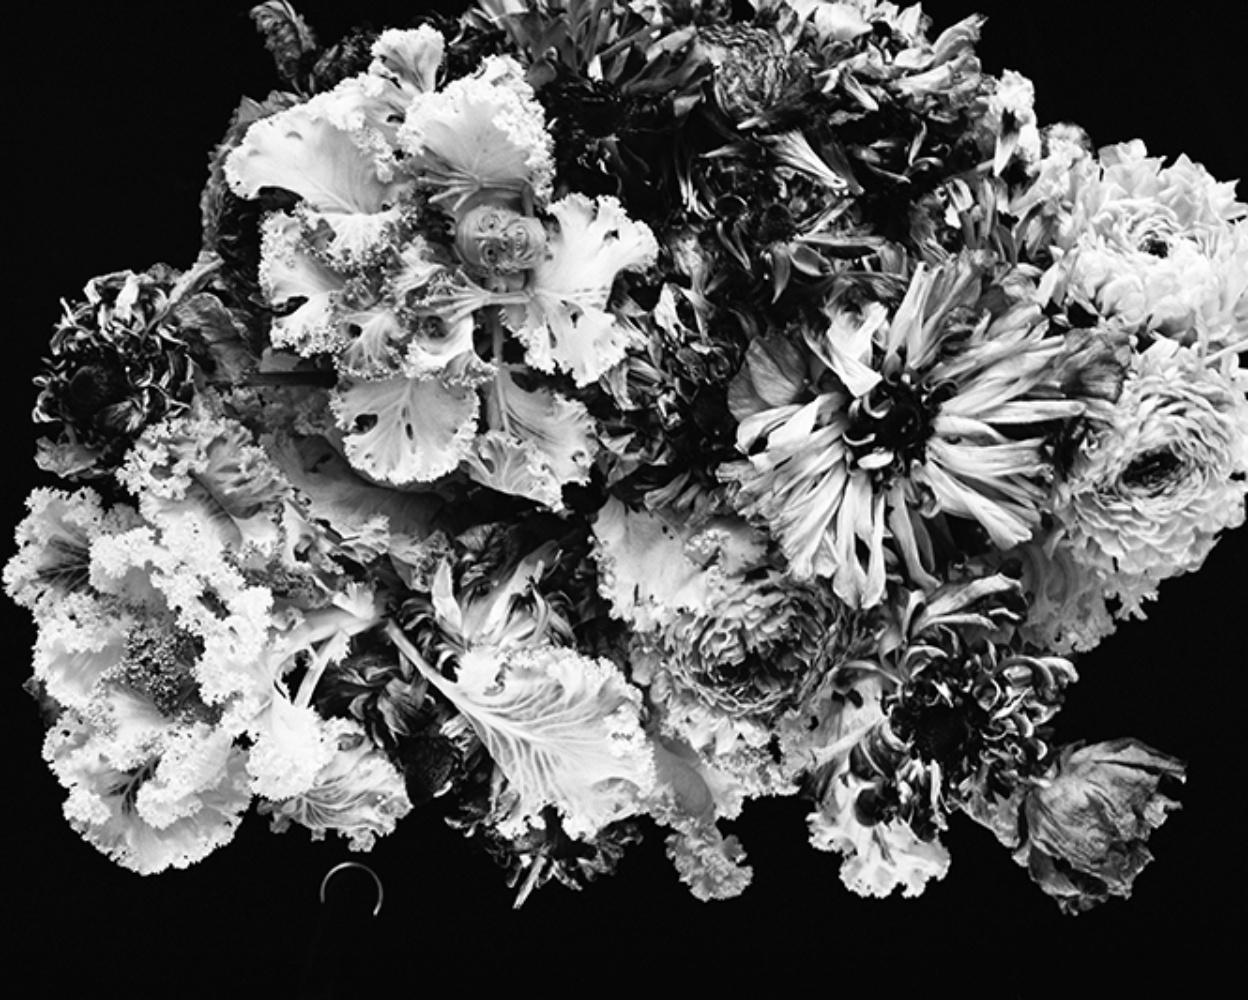 Nobuyoshi ARAKI (*1940, Japan)
Love-Dream, Love-Nothing #014, 2018
gelatinesilberdruck
50.8 x 60 cm (20 x 23 5/8 Zoll)
Nur drucken

- Nobuyoshi Araki
Nobuyoshi Araki (Tokio, 1940) ist ein in Tokio lebender Fotograf. Araki schloss sein Studium an der